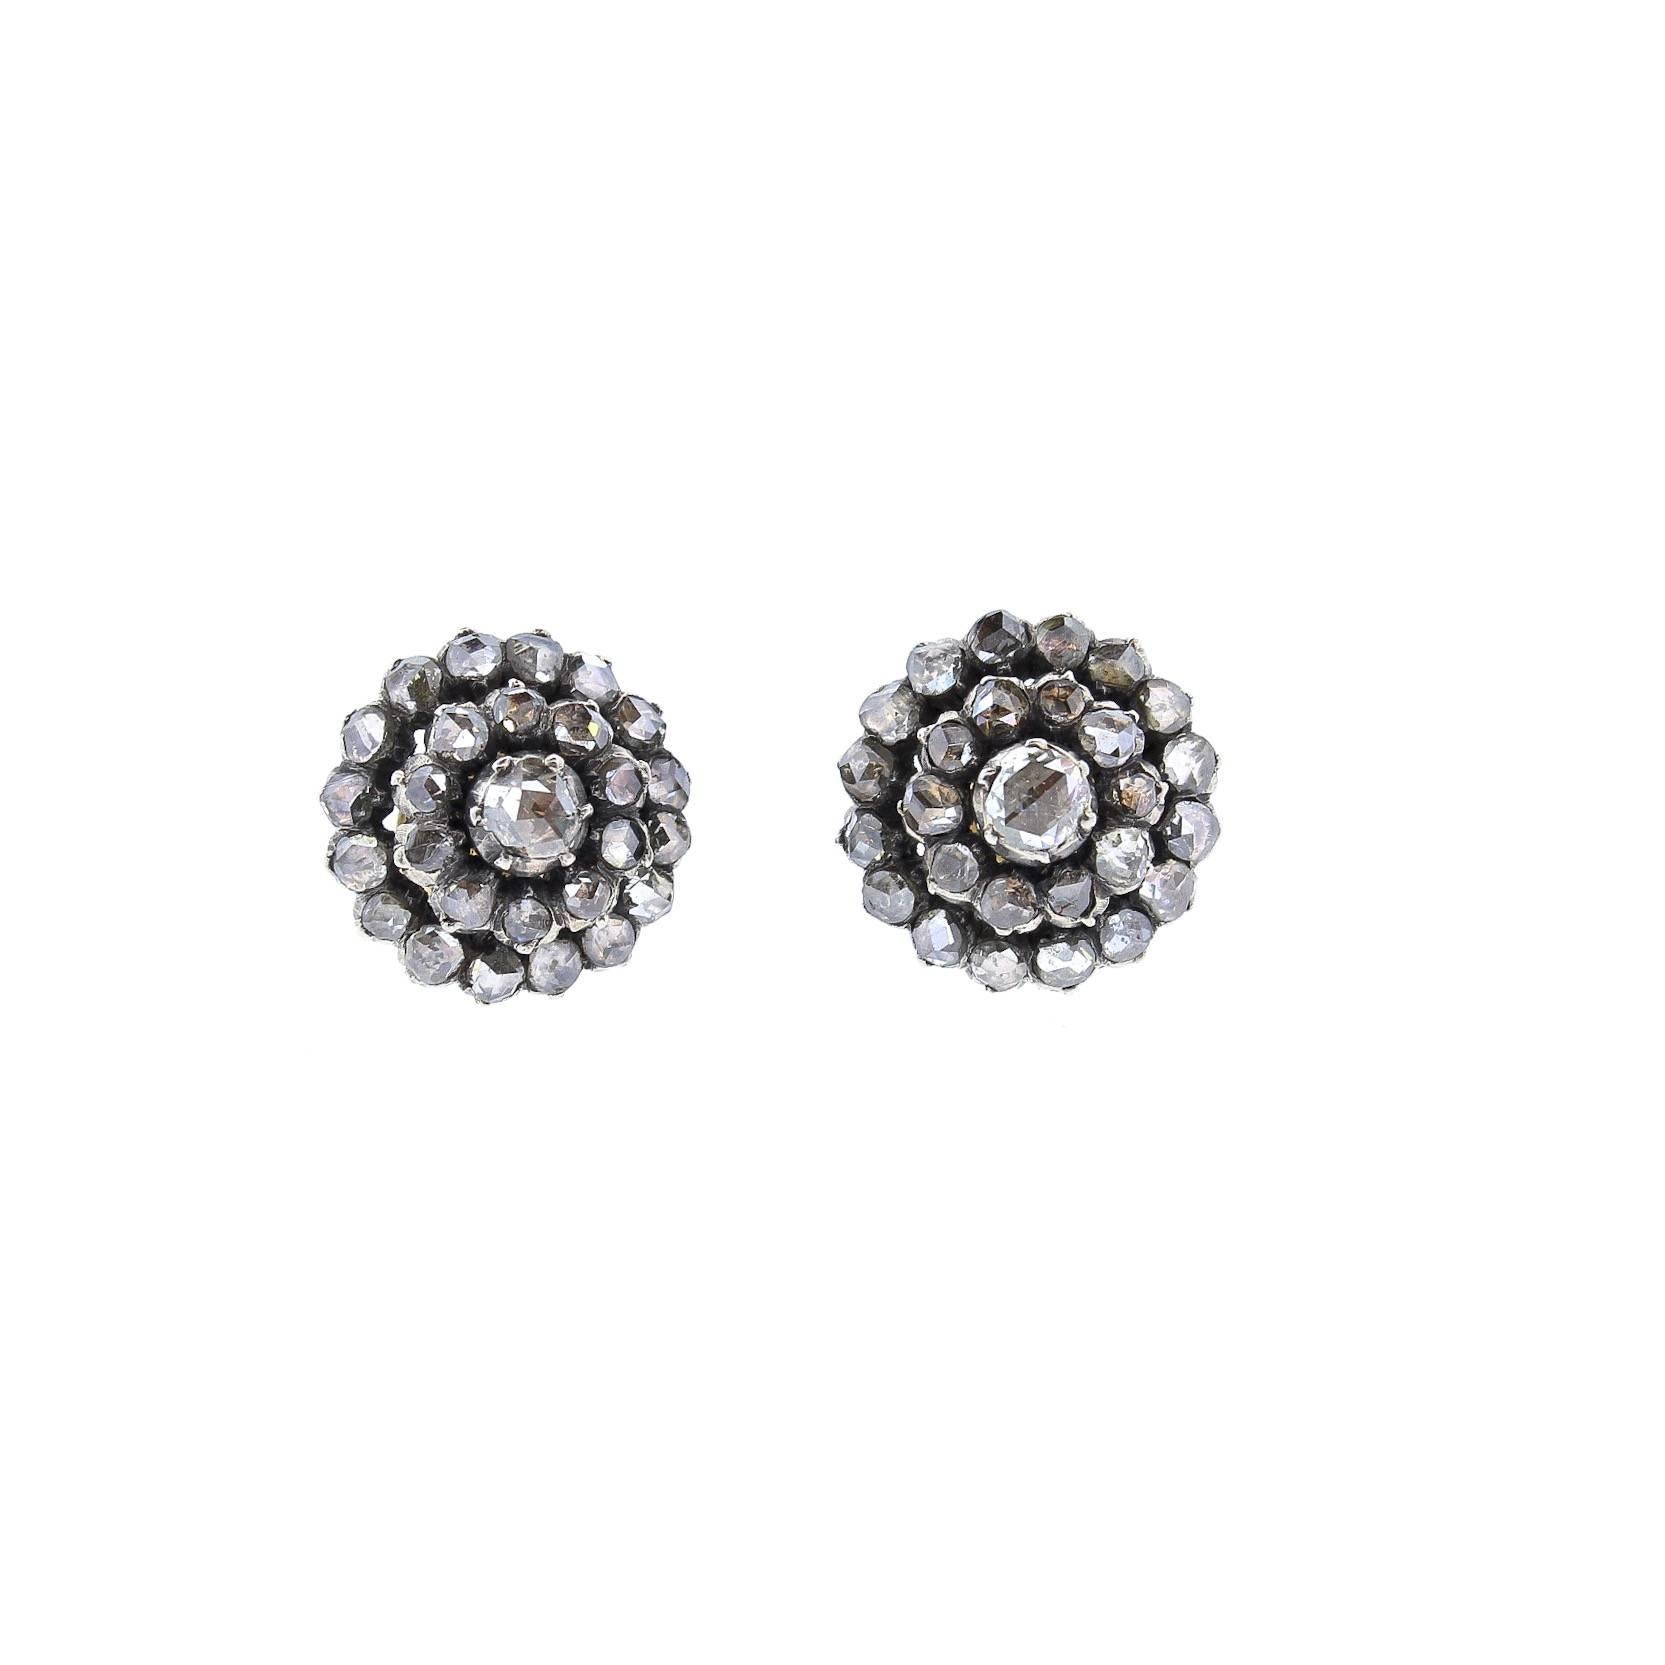 rose cut diamond earrings antique